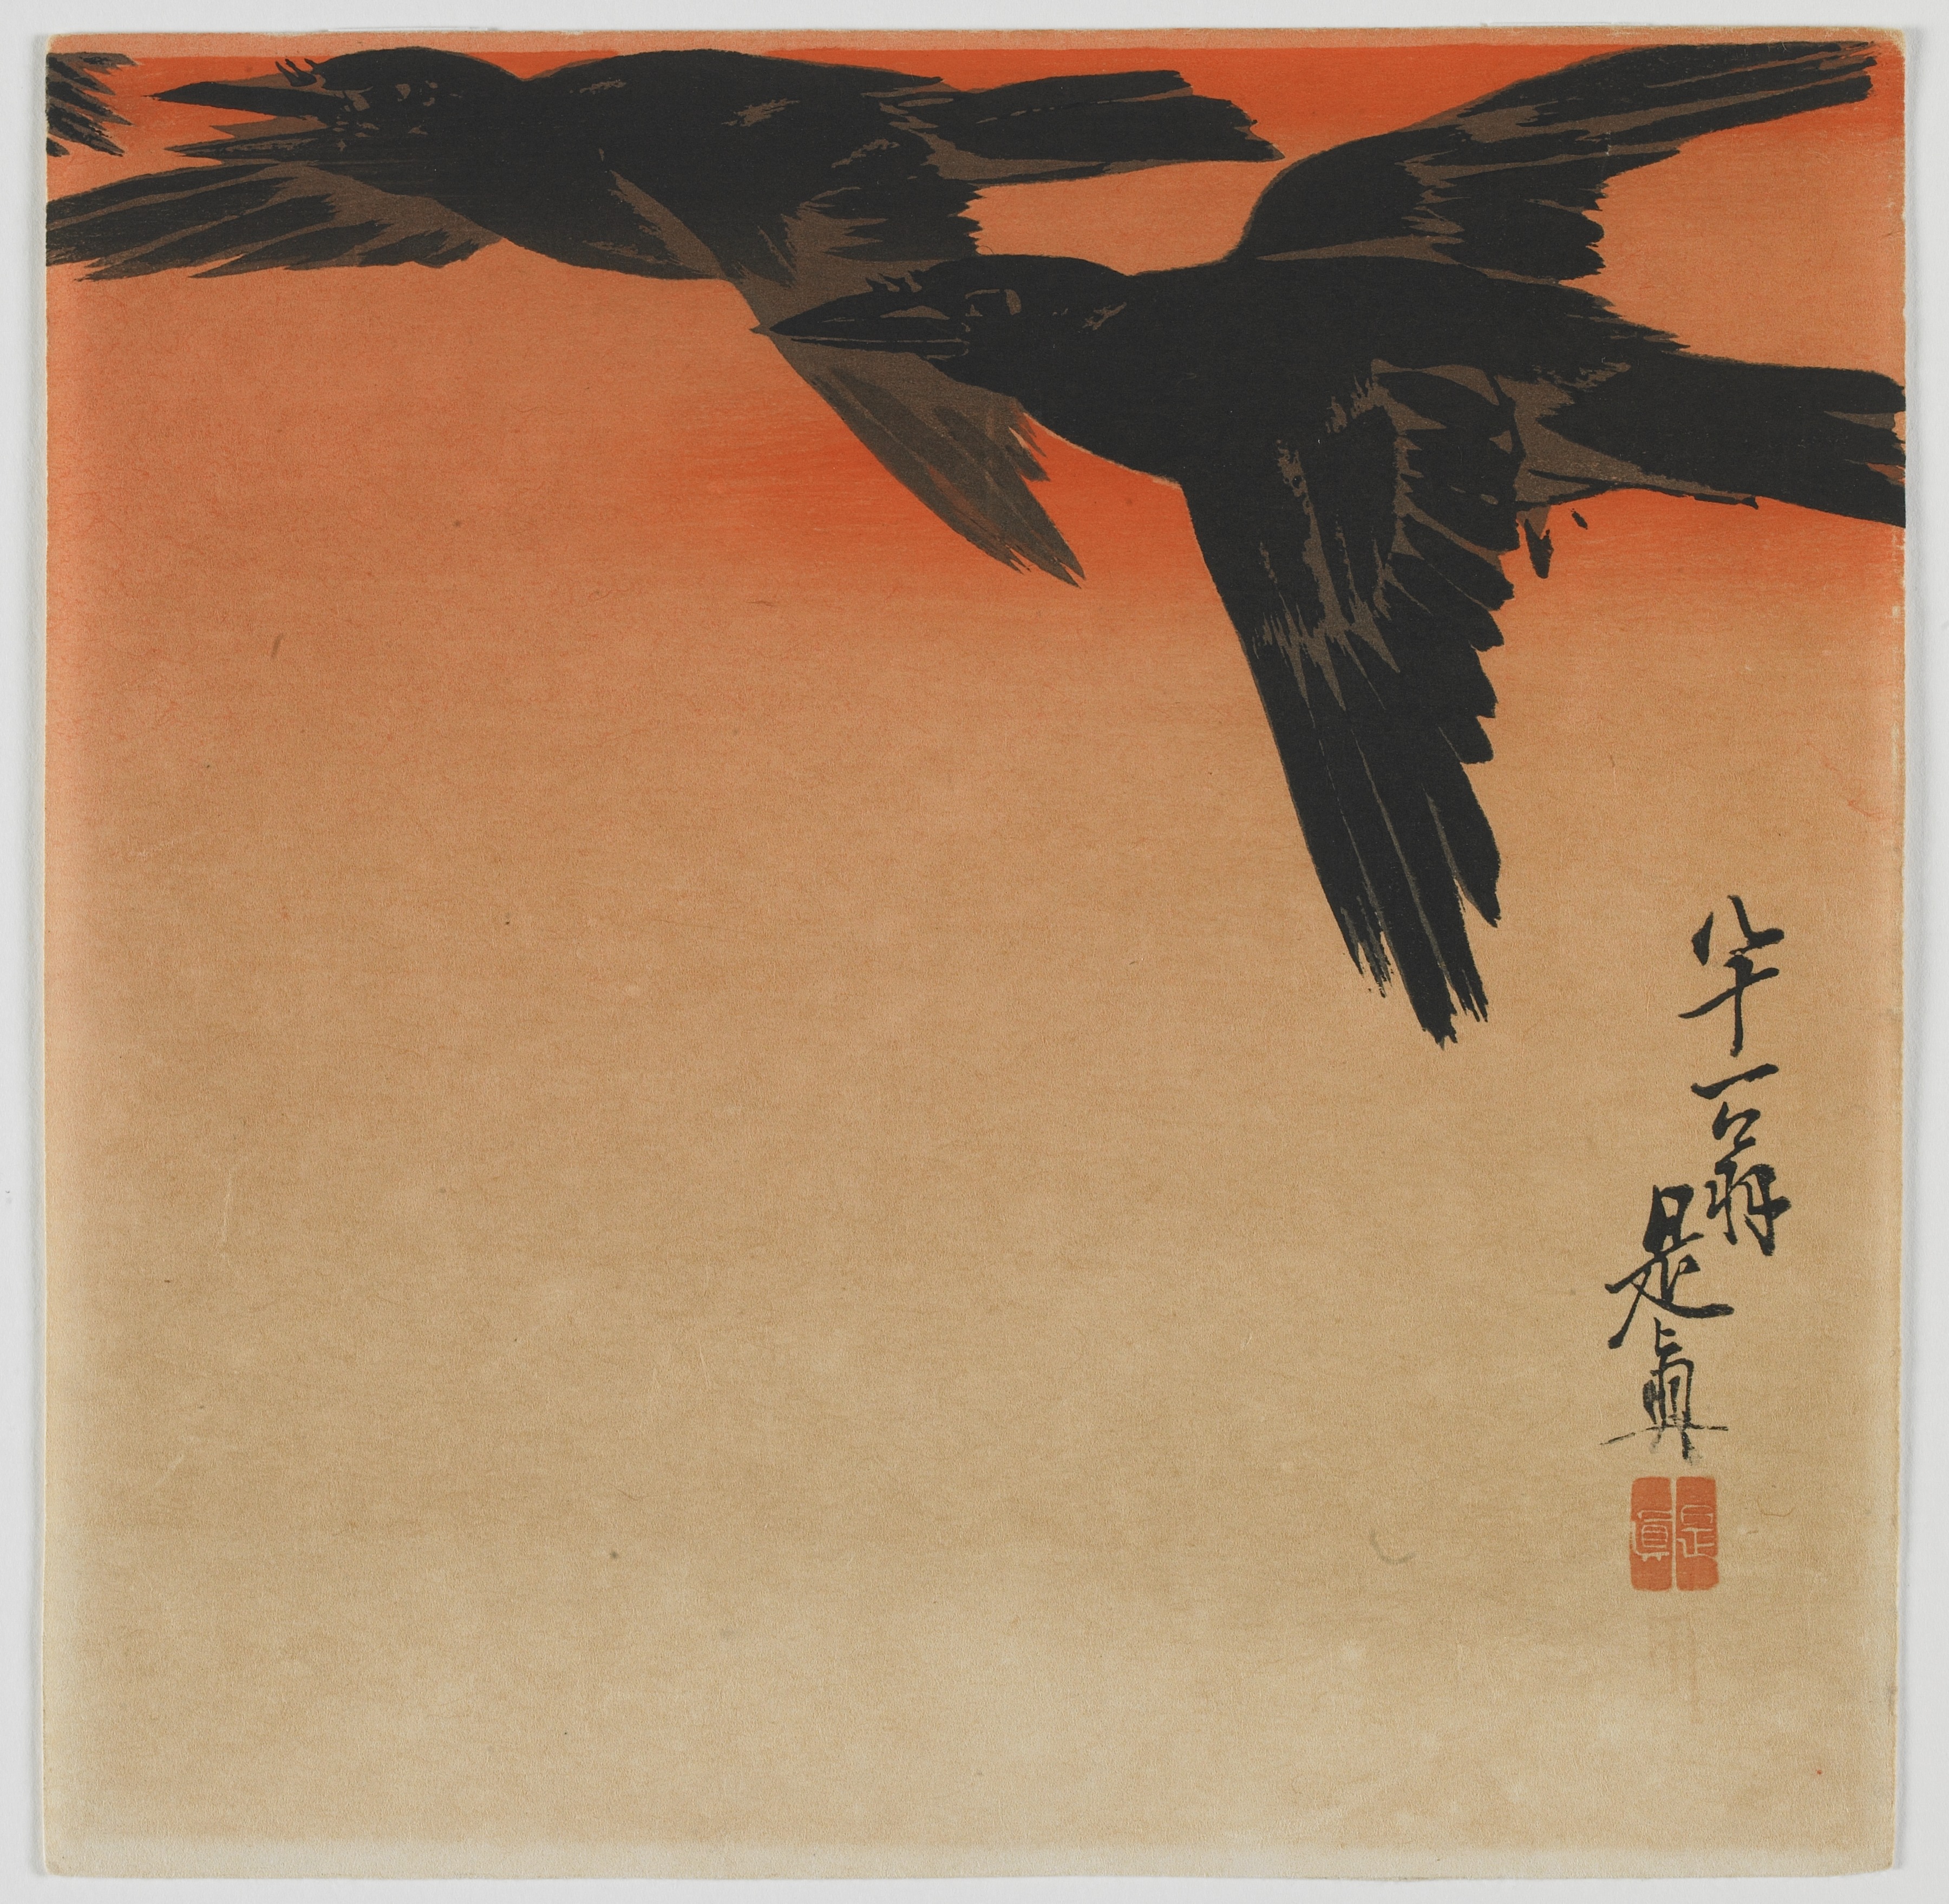 Corvos no Crepúsculo by Shibata Zeshin - Final do século 19 - 23.8 x 23.9 cm 